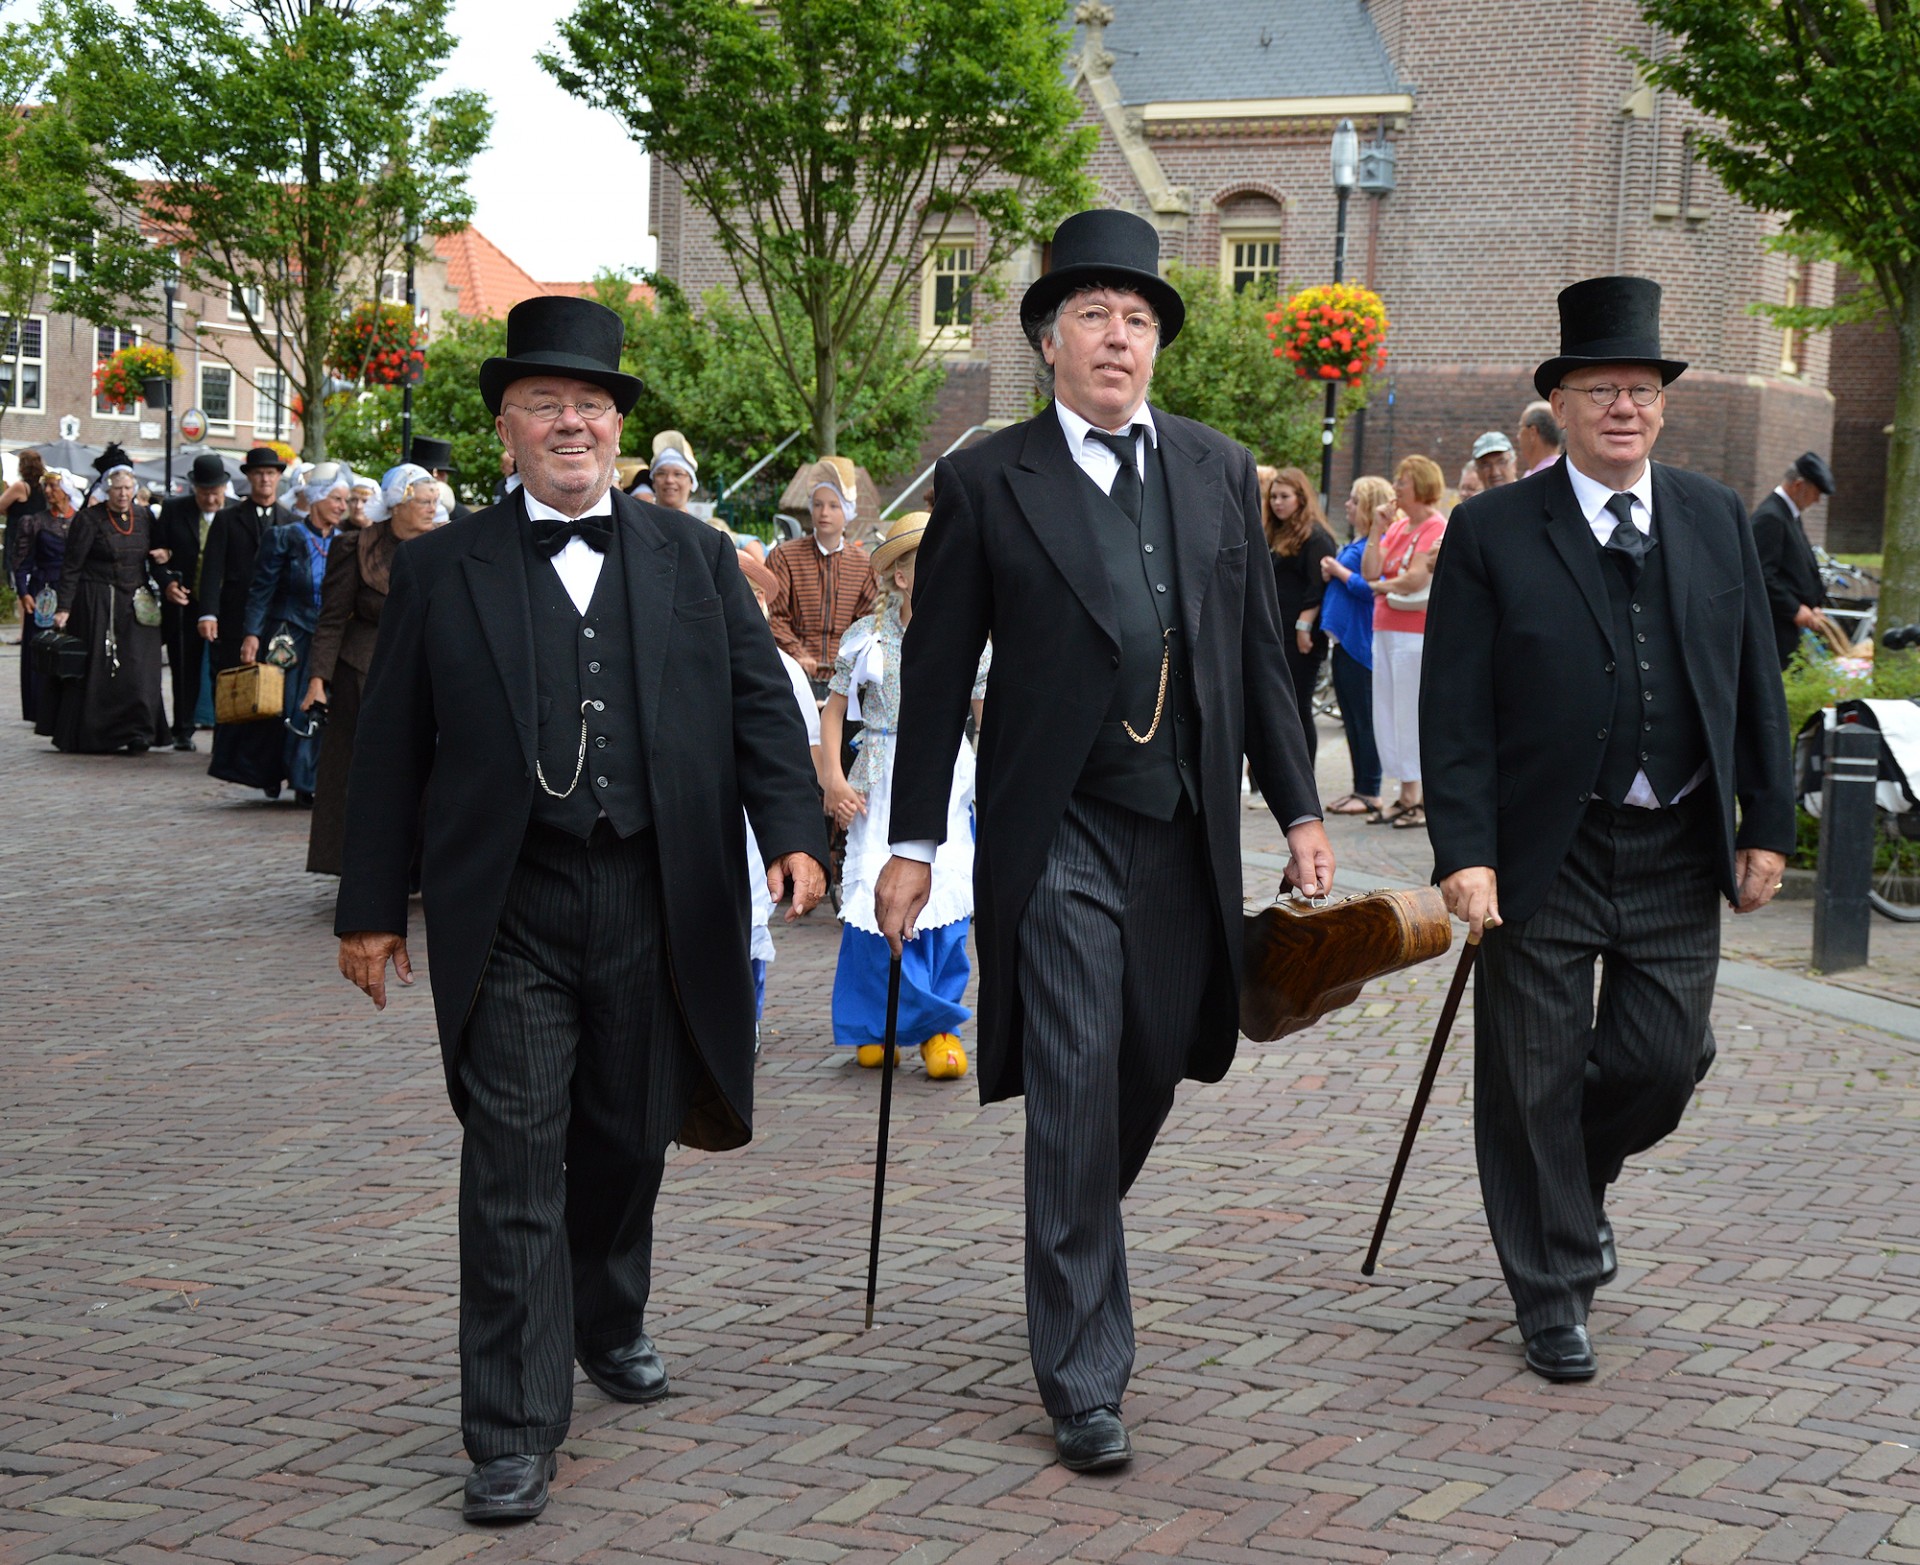 Dutch traditional clothing